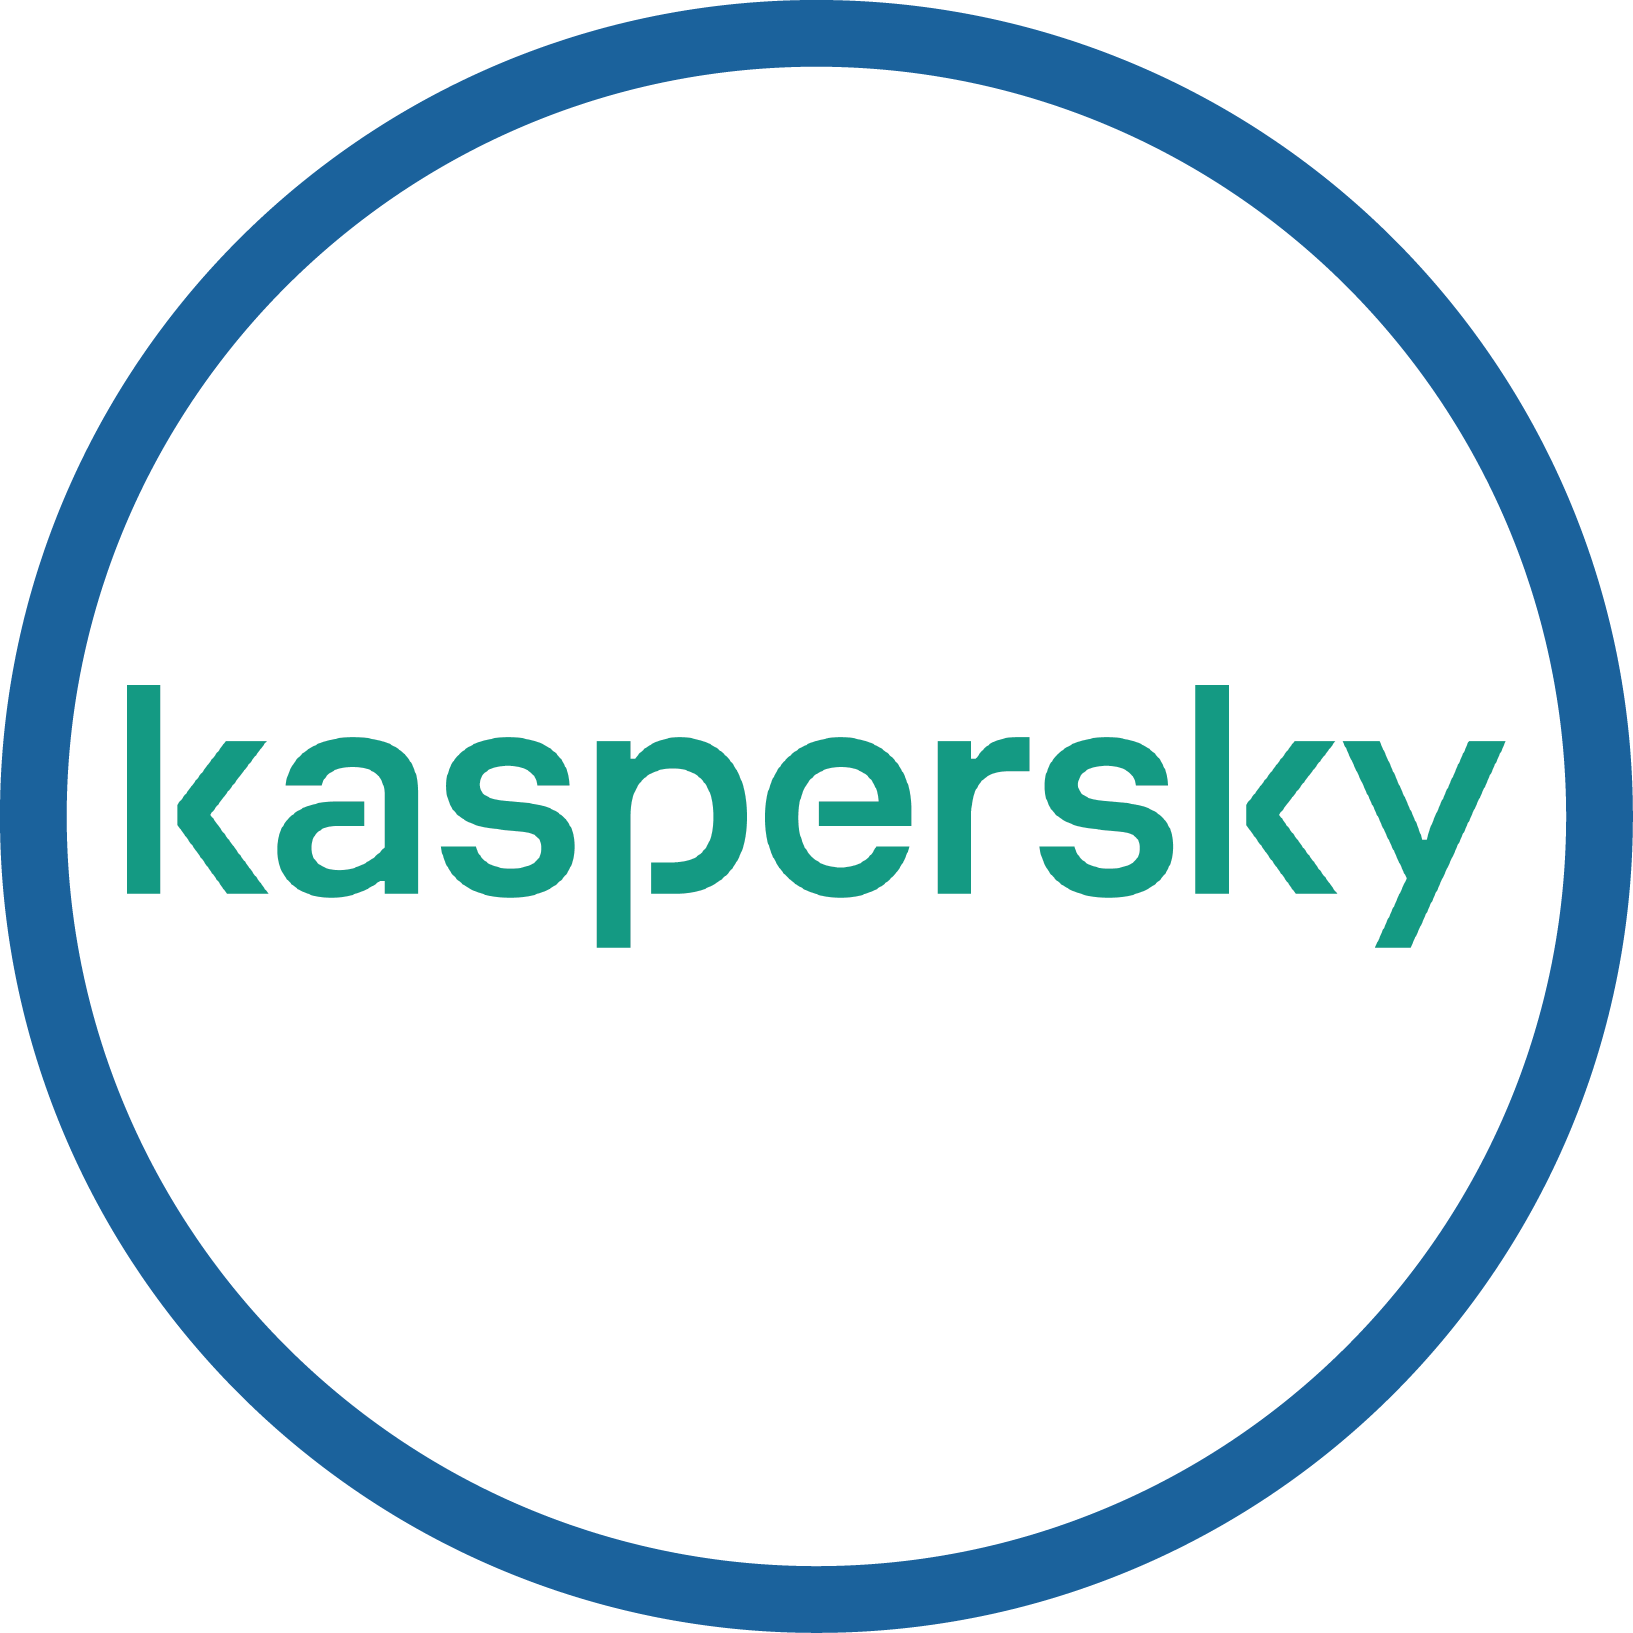 logos circulo KASPERSKY - arktics